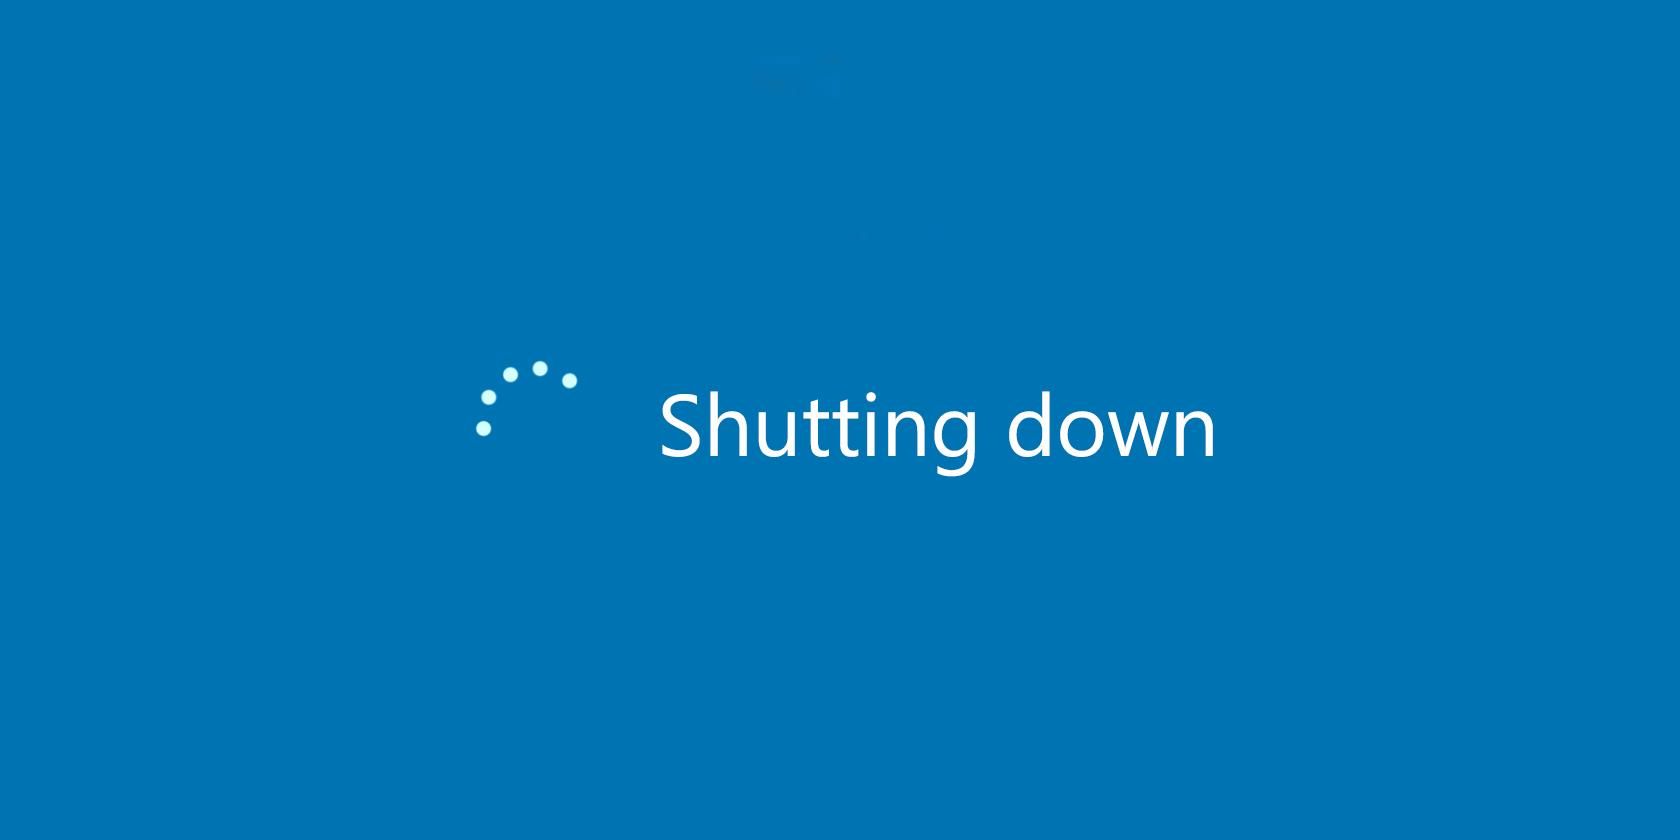 How to Shut Down or Sleep Windows 10/11 With a Keyboard Shortcut: 5 Ways